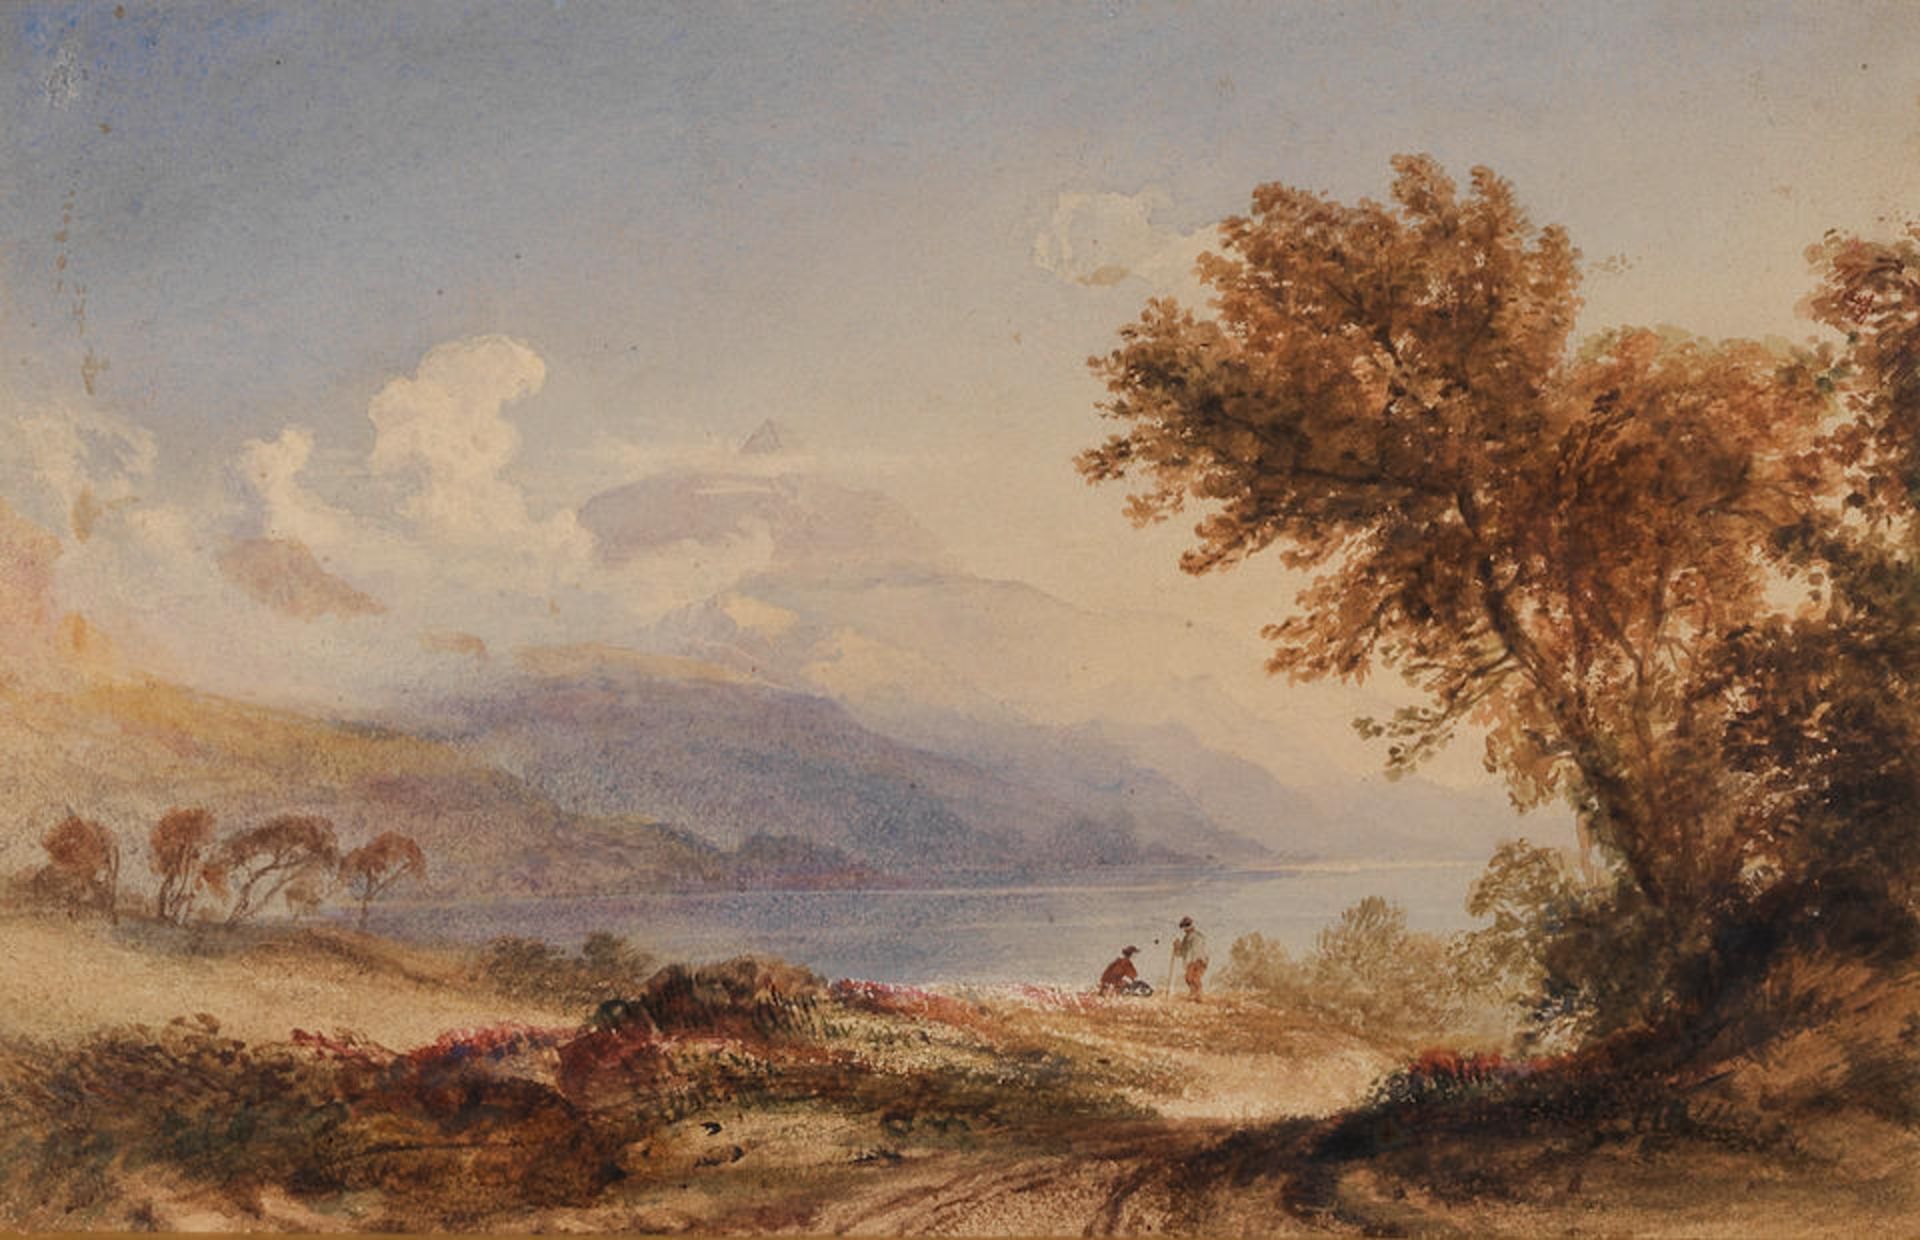 Anthony Vandyke Copley Fielding, P.O.W.S. (British, 1787-1855) Resting by the lake